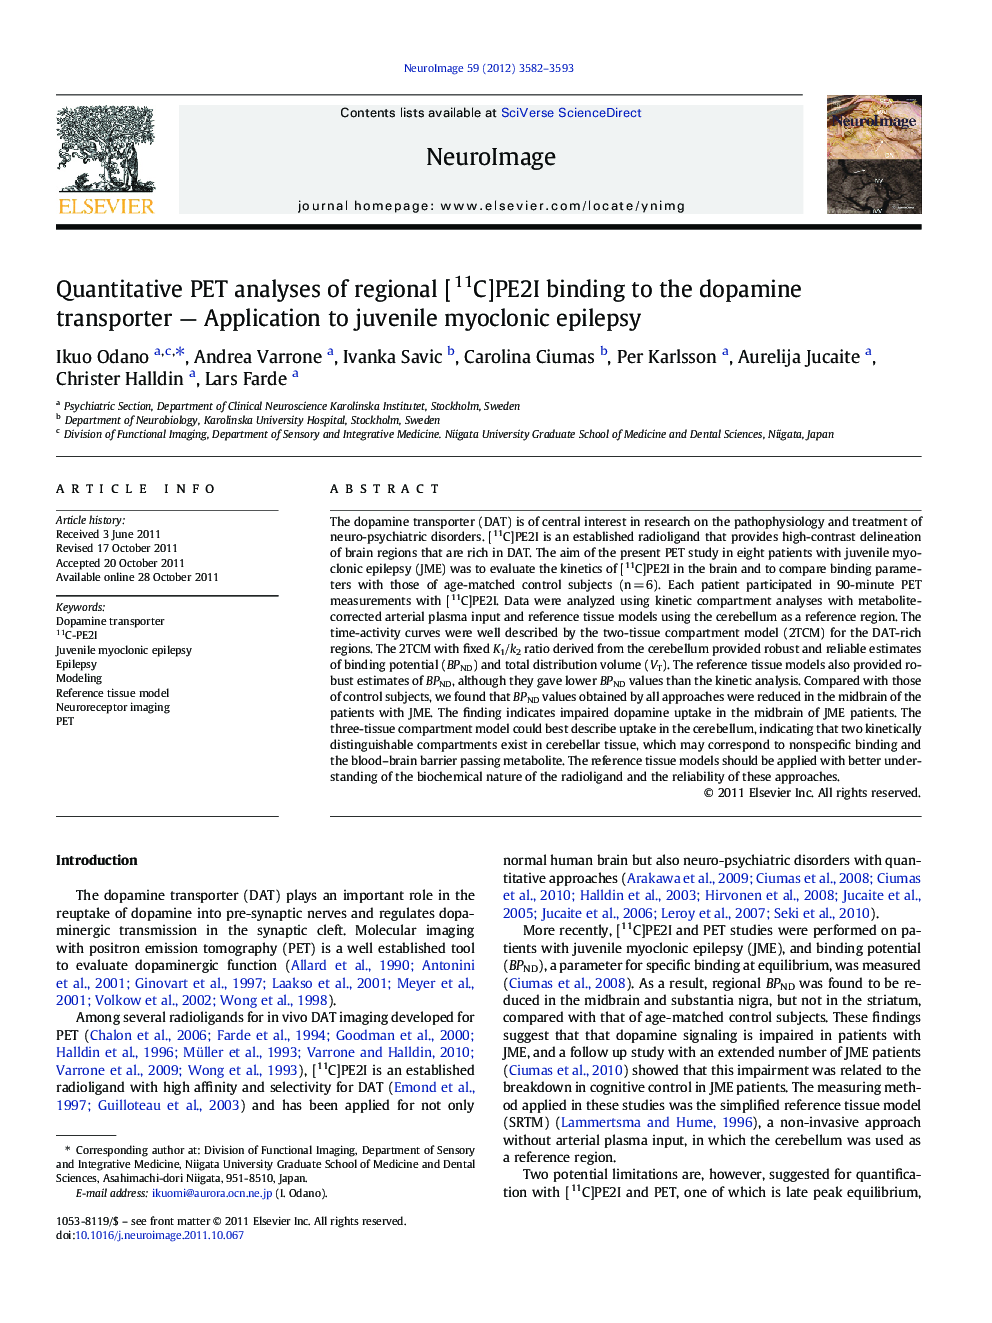 Quantitative PET analyses of regional [11C]PE2I binding to the dopamine transporter - Application to juvenile myoclonic epilepsy